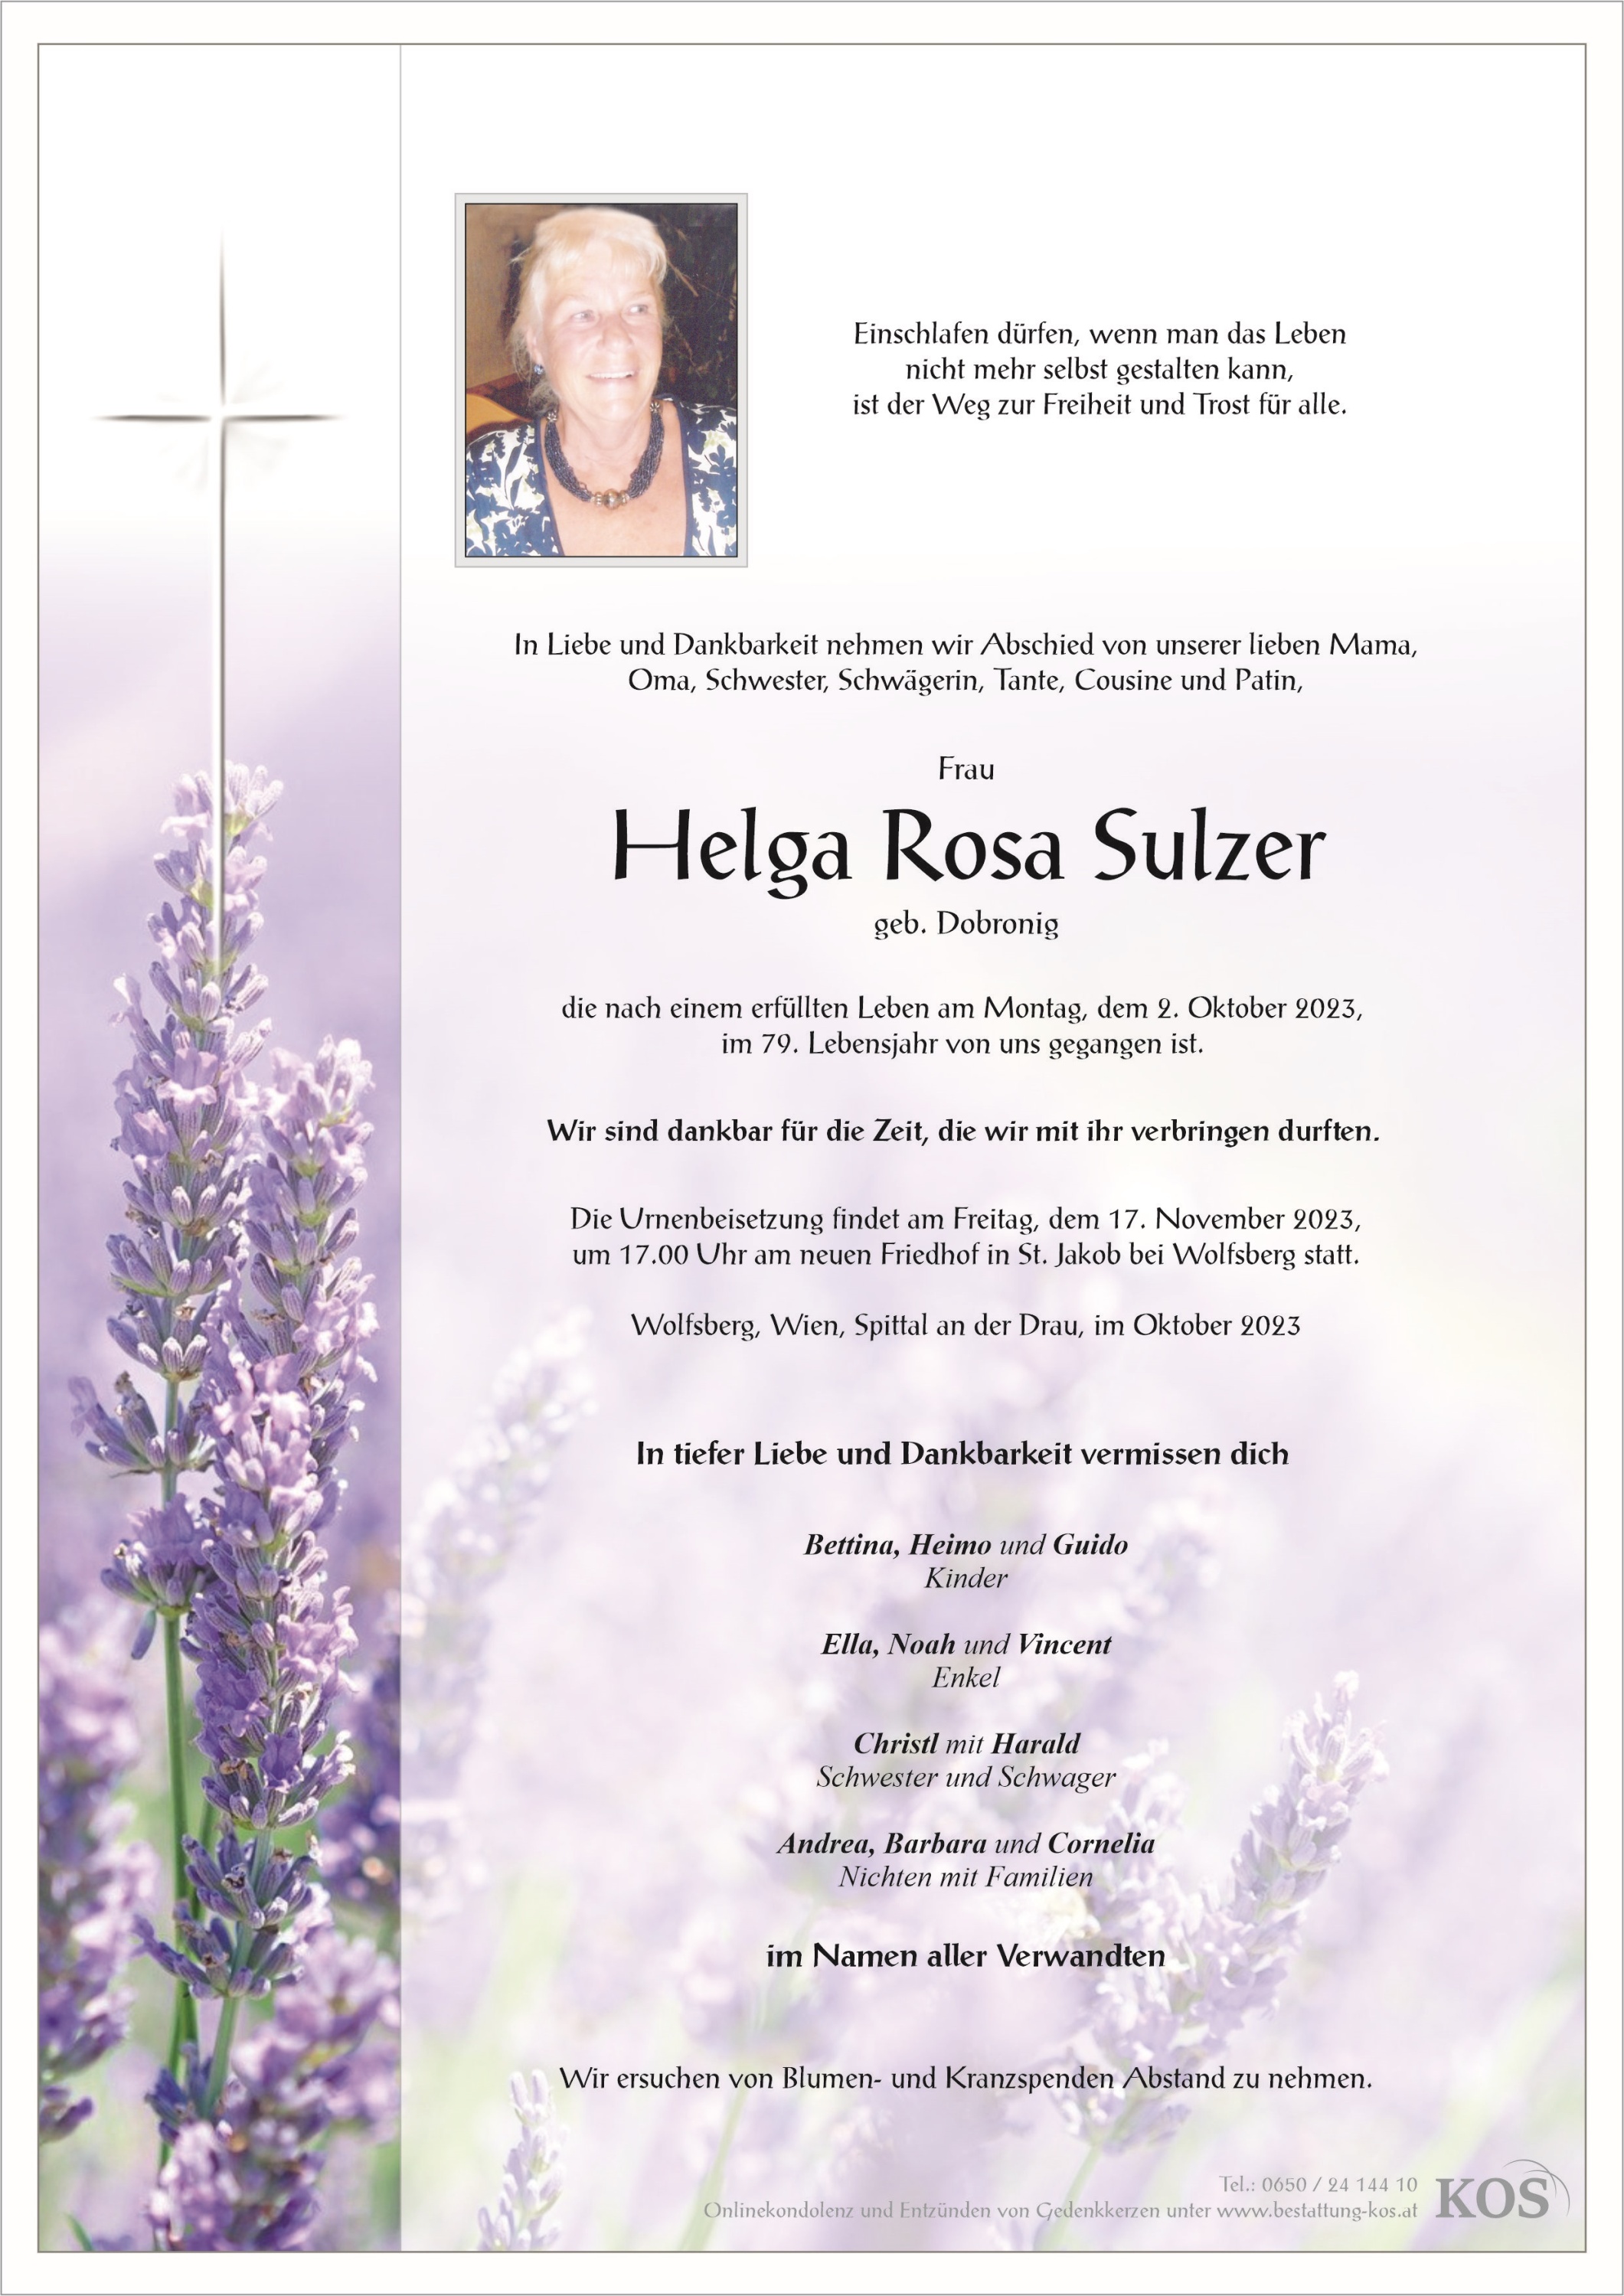 Helga Rosa Sulzer